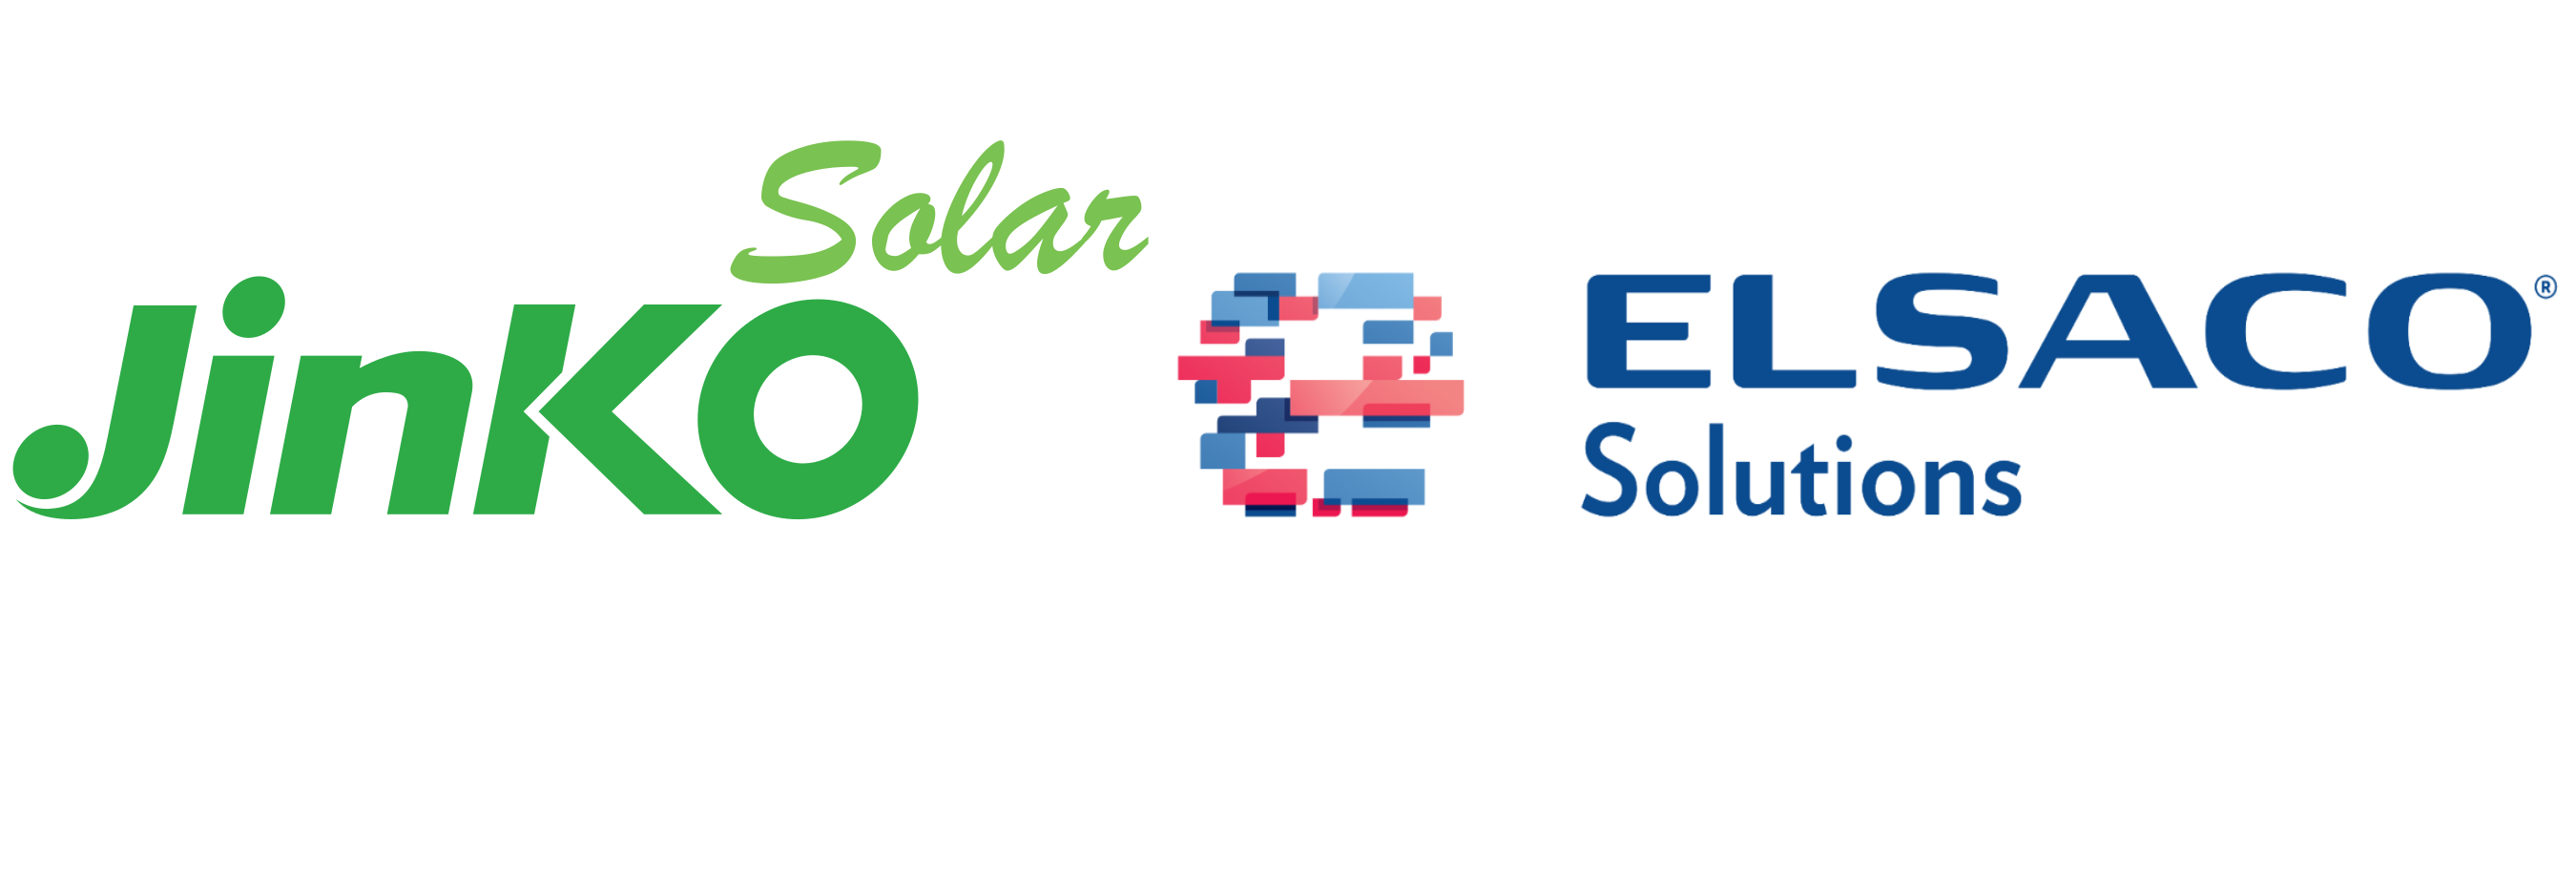 Jinko Solar - Elsaco Solutions